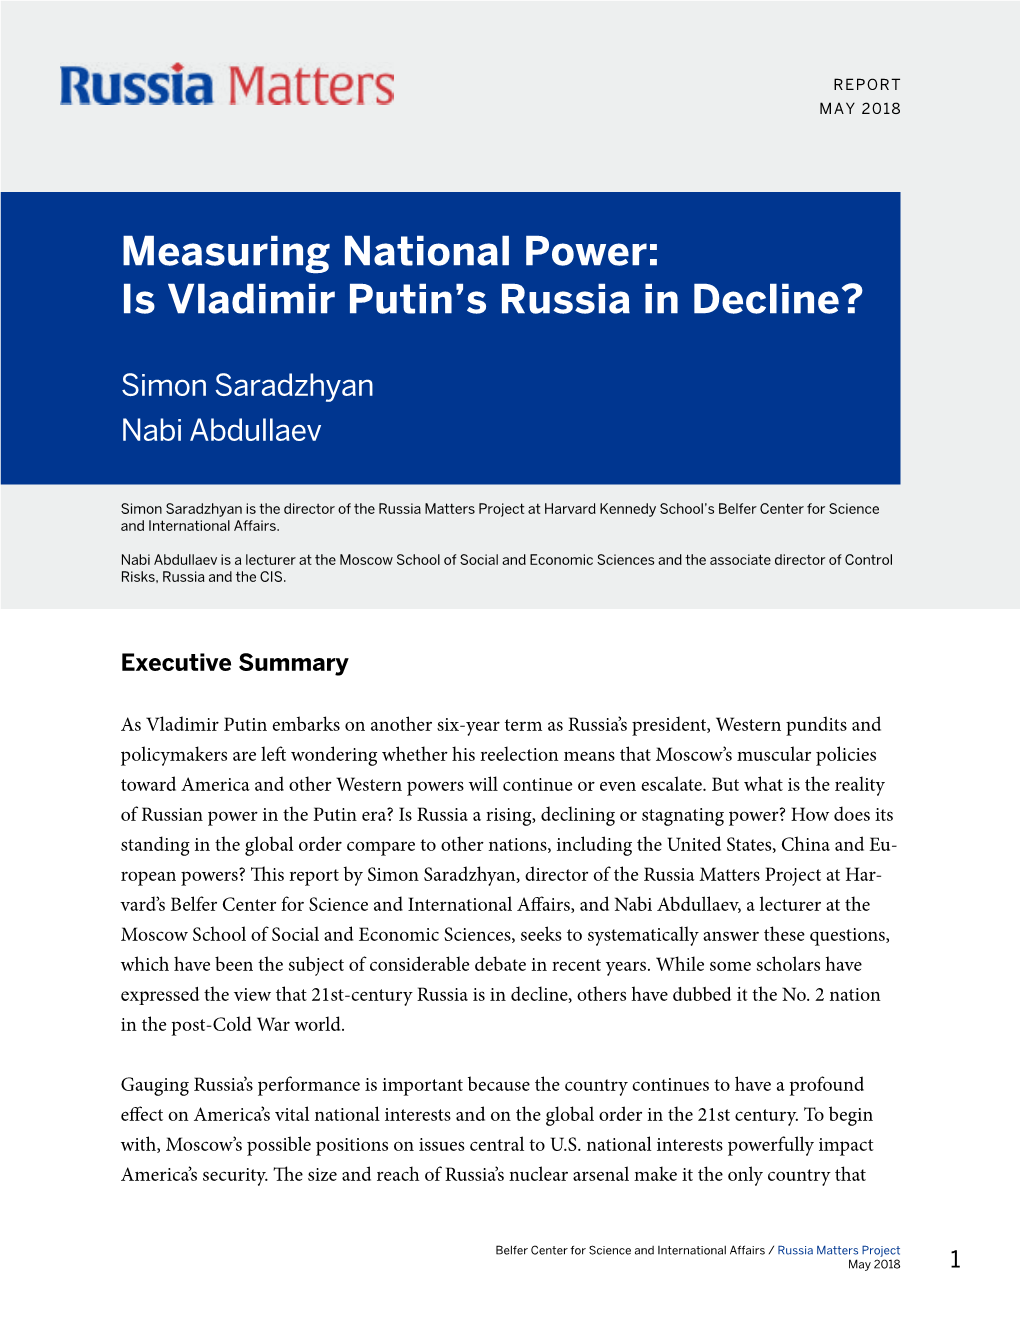 Measuring National Power: Is Vladimir Putin's Russia in Decline?